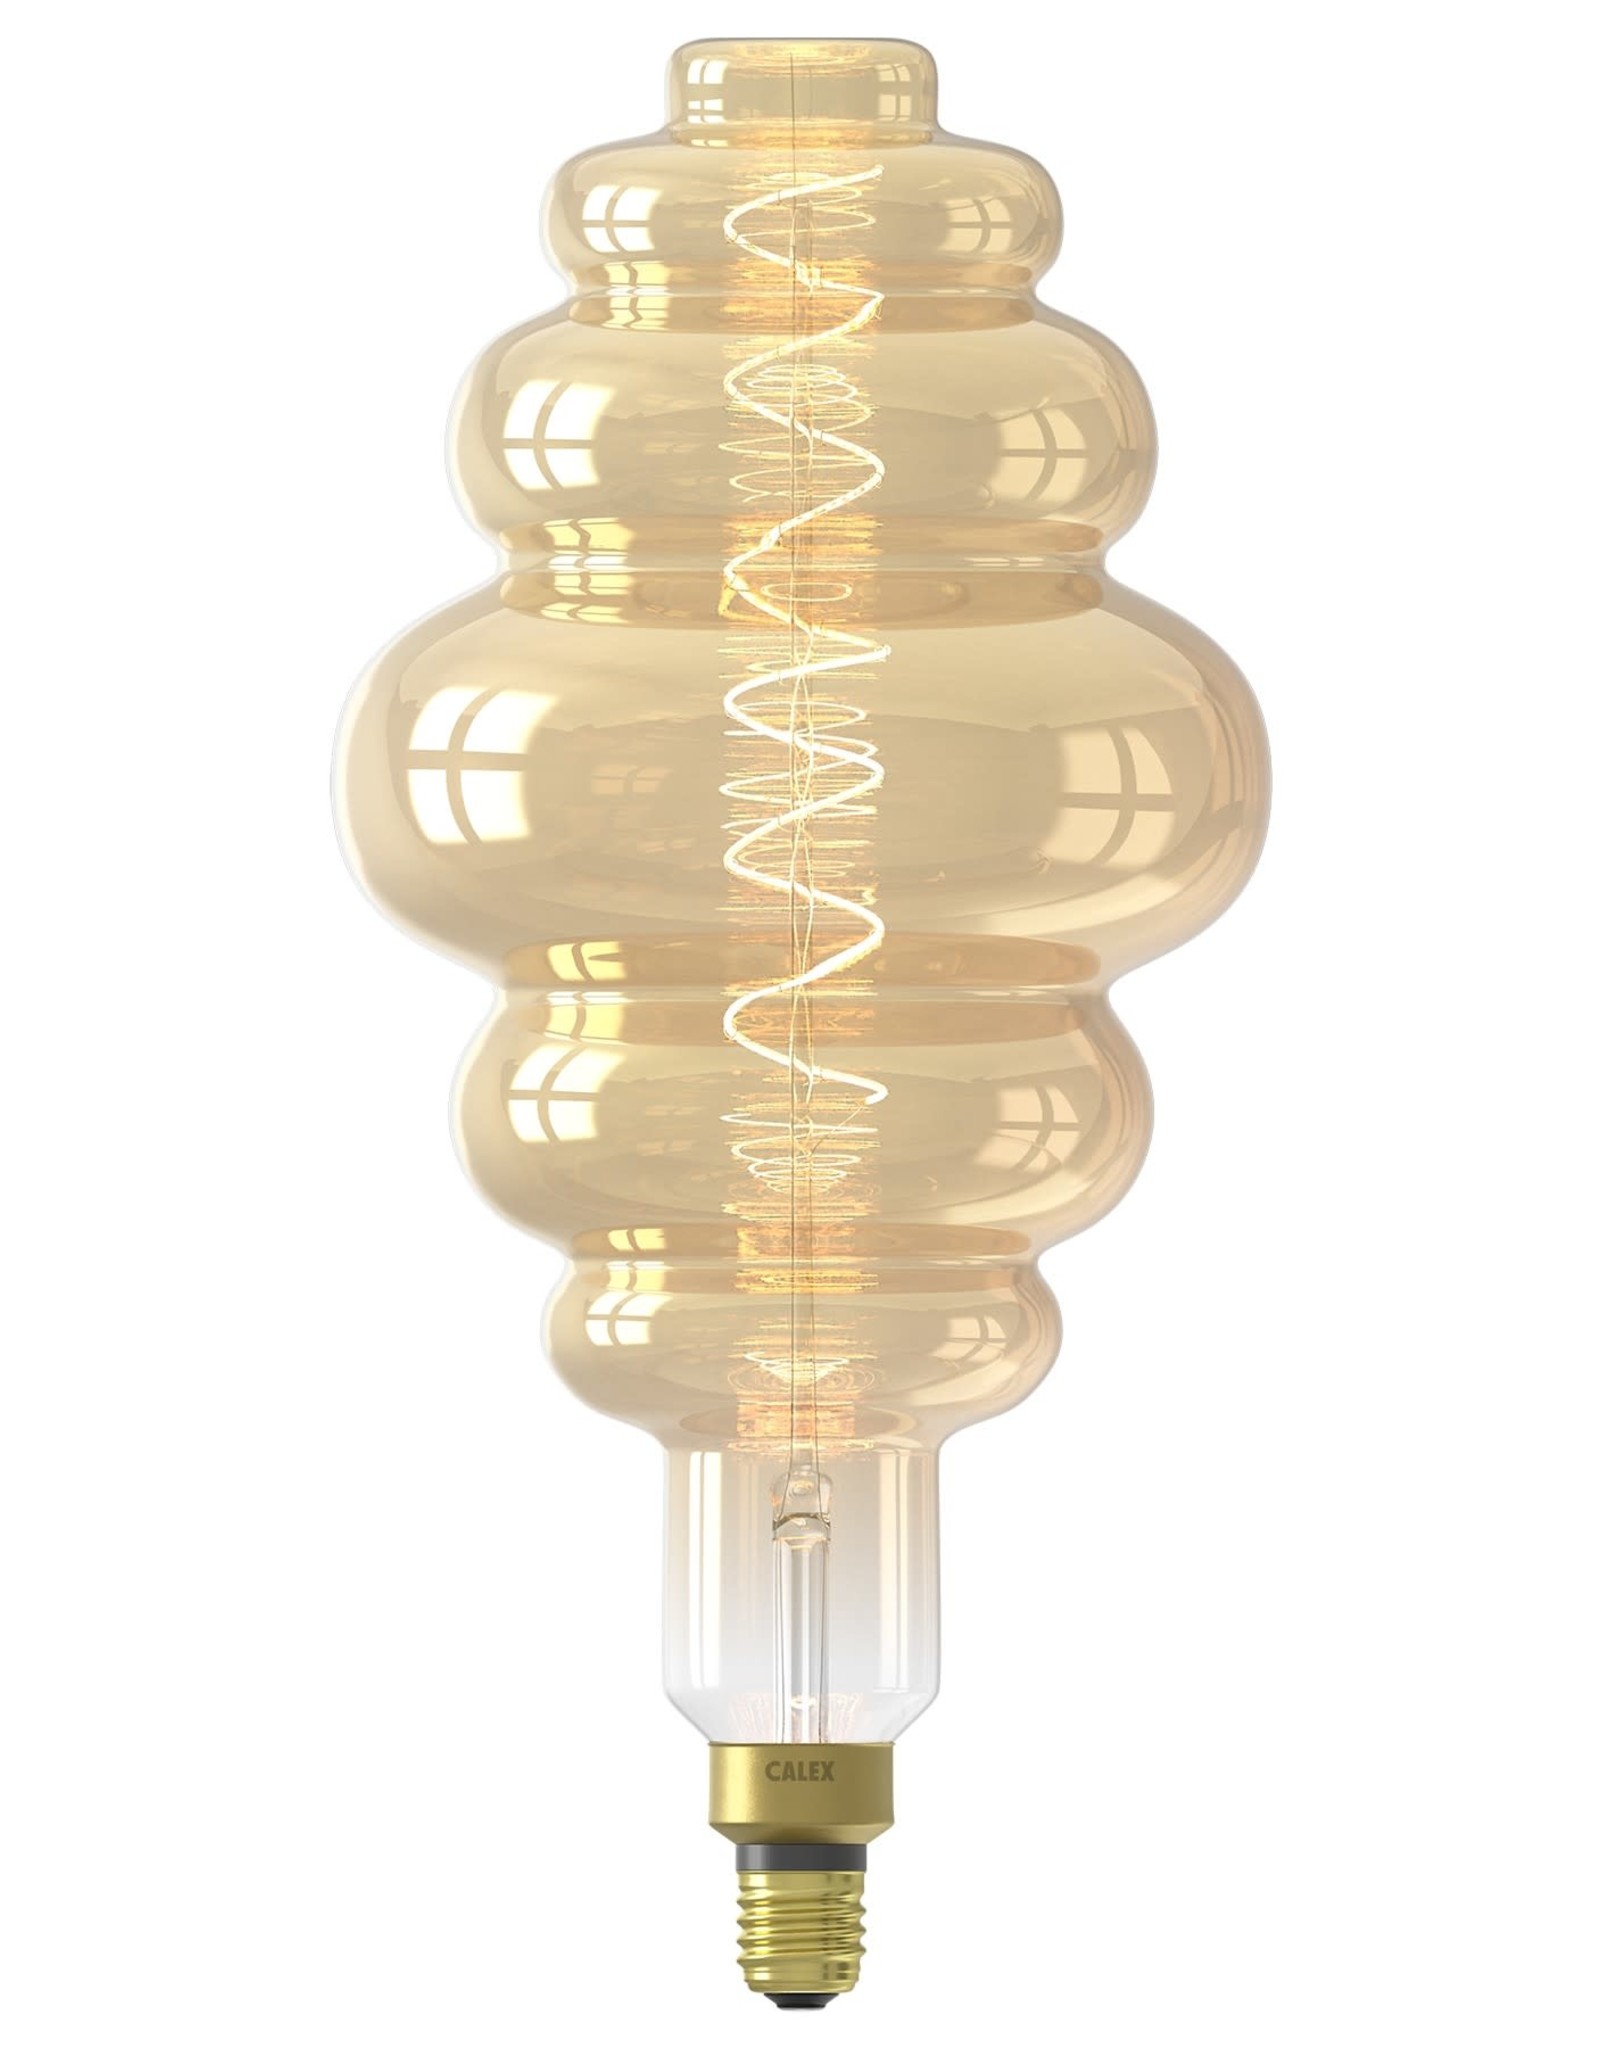 Calex XXL Paris LED Lamp 220-240V 4W 320lm E27 LS200, Gold 2200K dimmable, energy label A